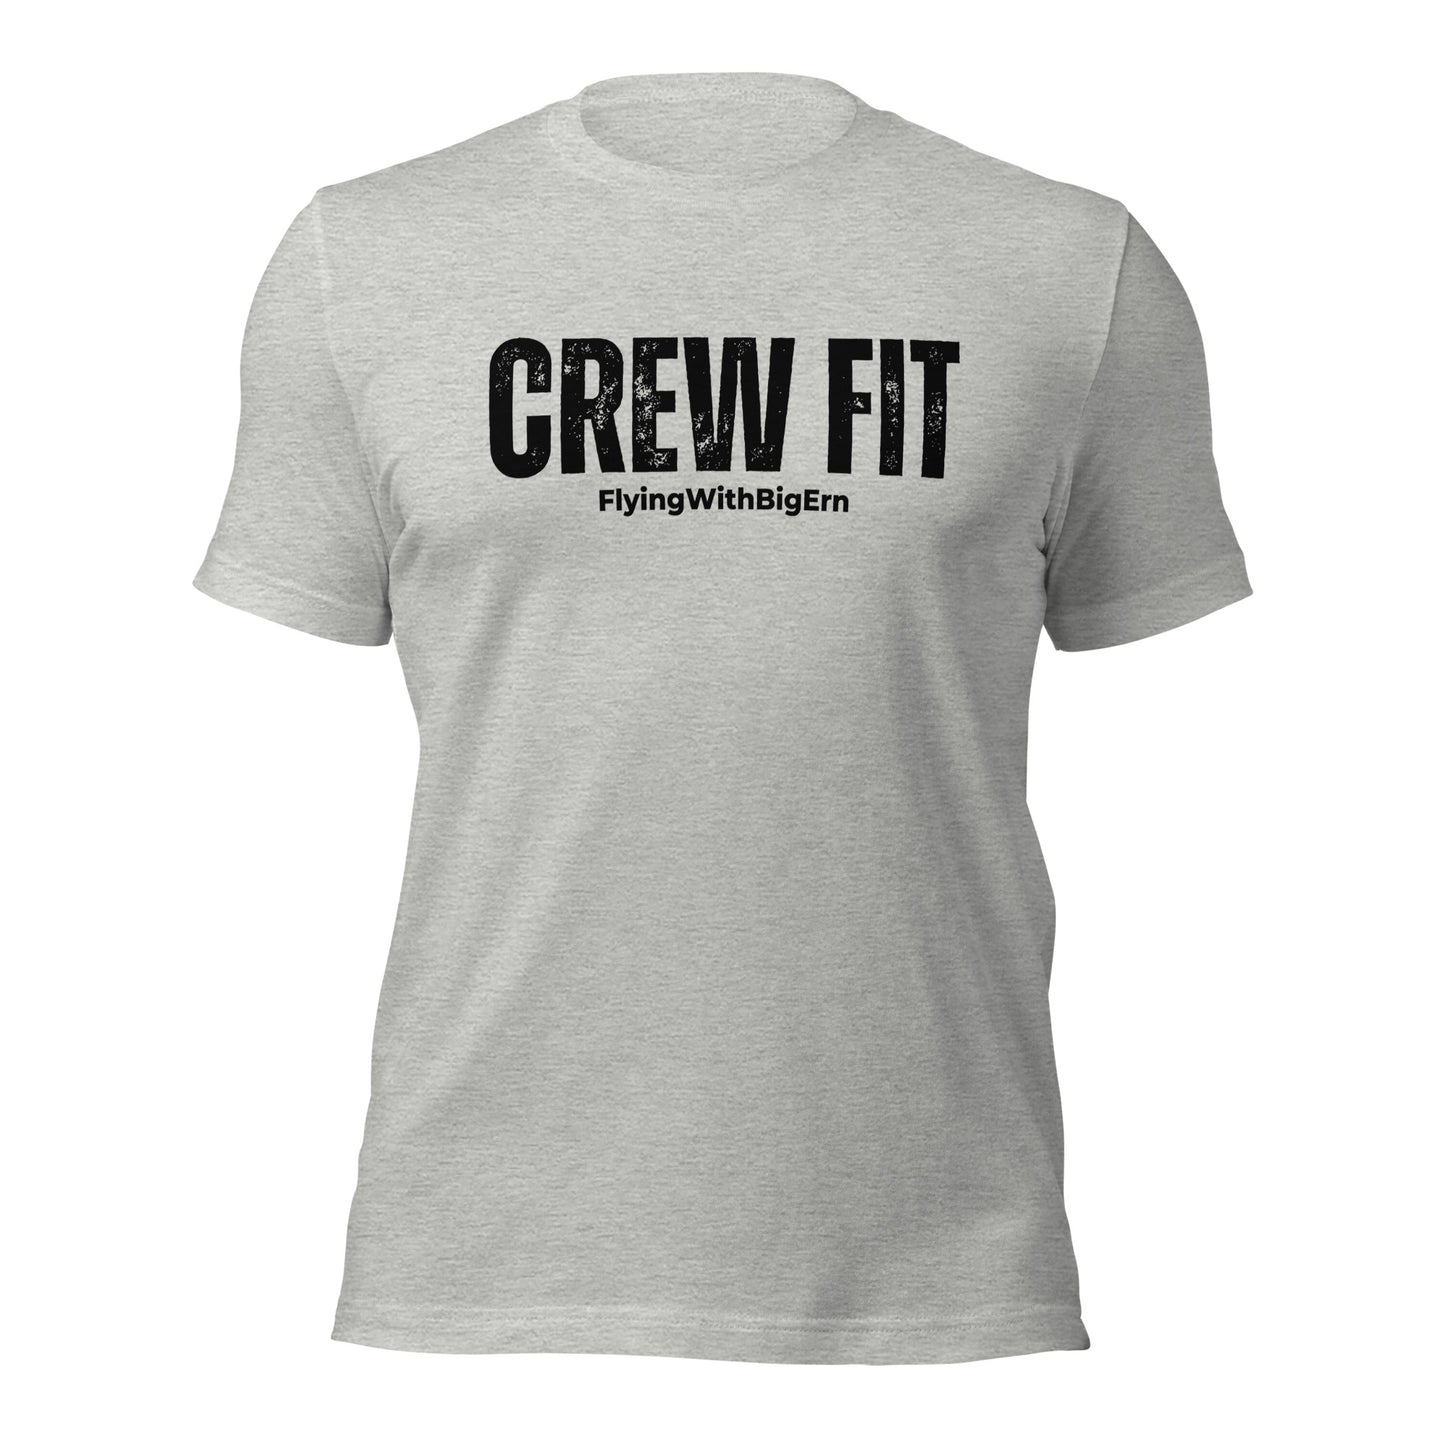 CrewFit t-shirt